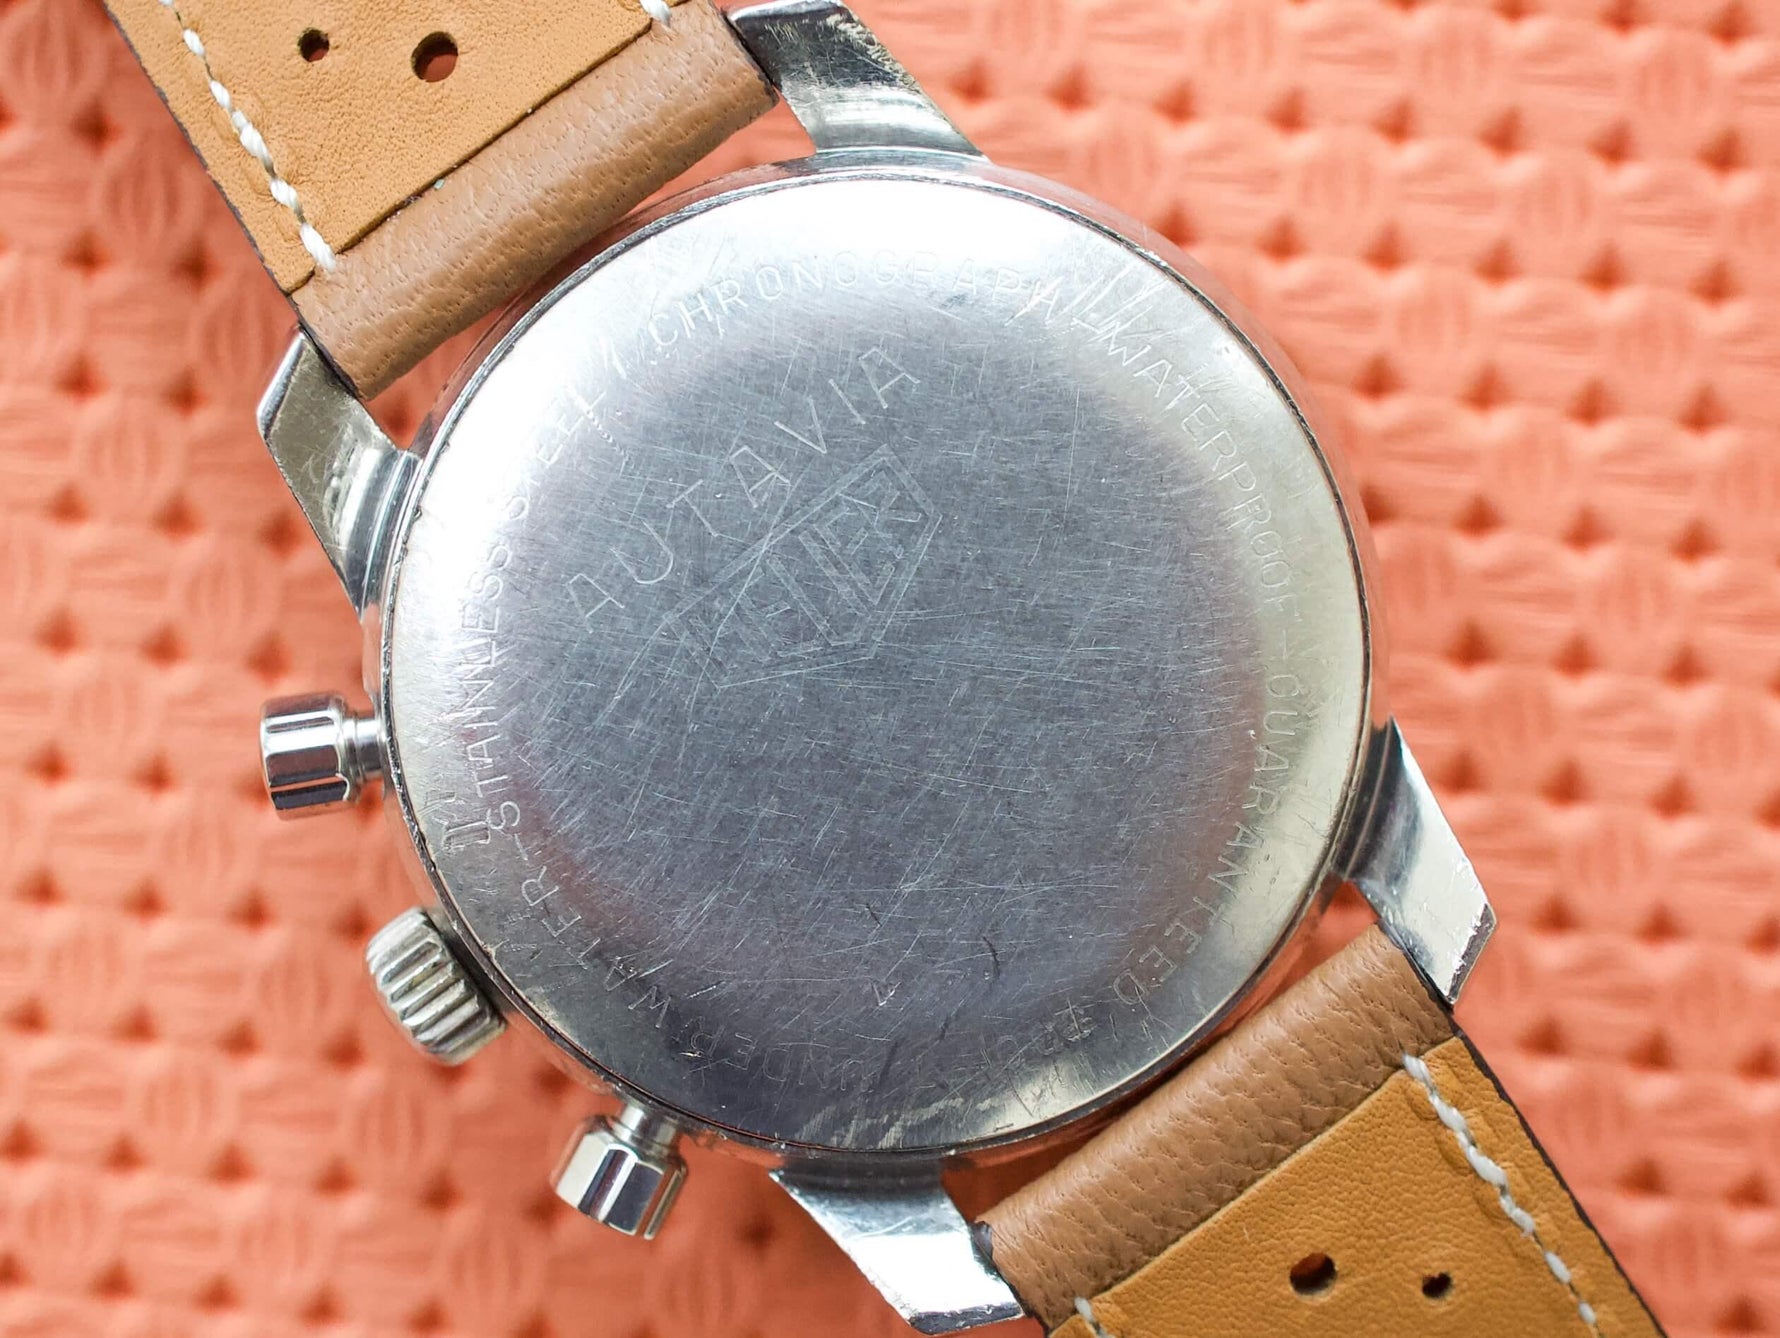 Heuer Autavia 7763C 40MM Vintage Racing Chronograph Black Steel 1968 - WearingTime Luxury Watches